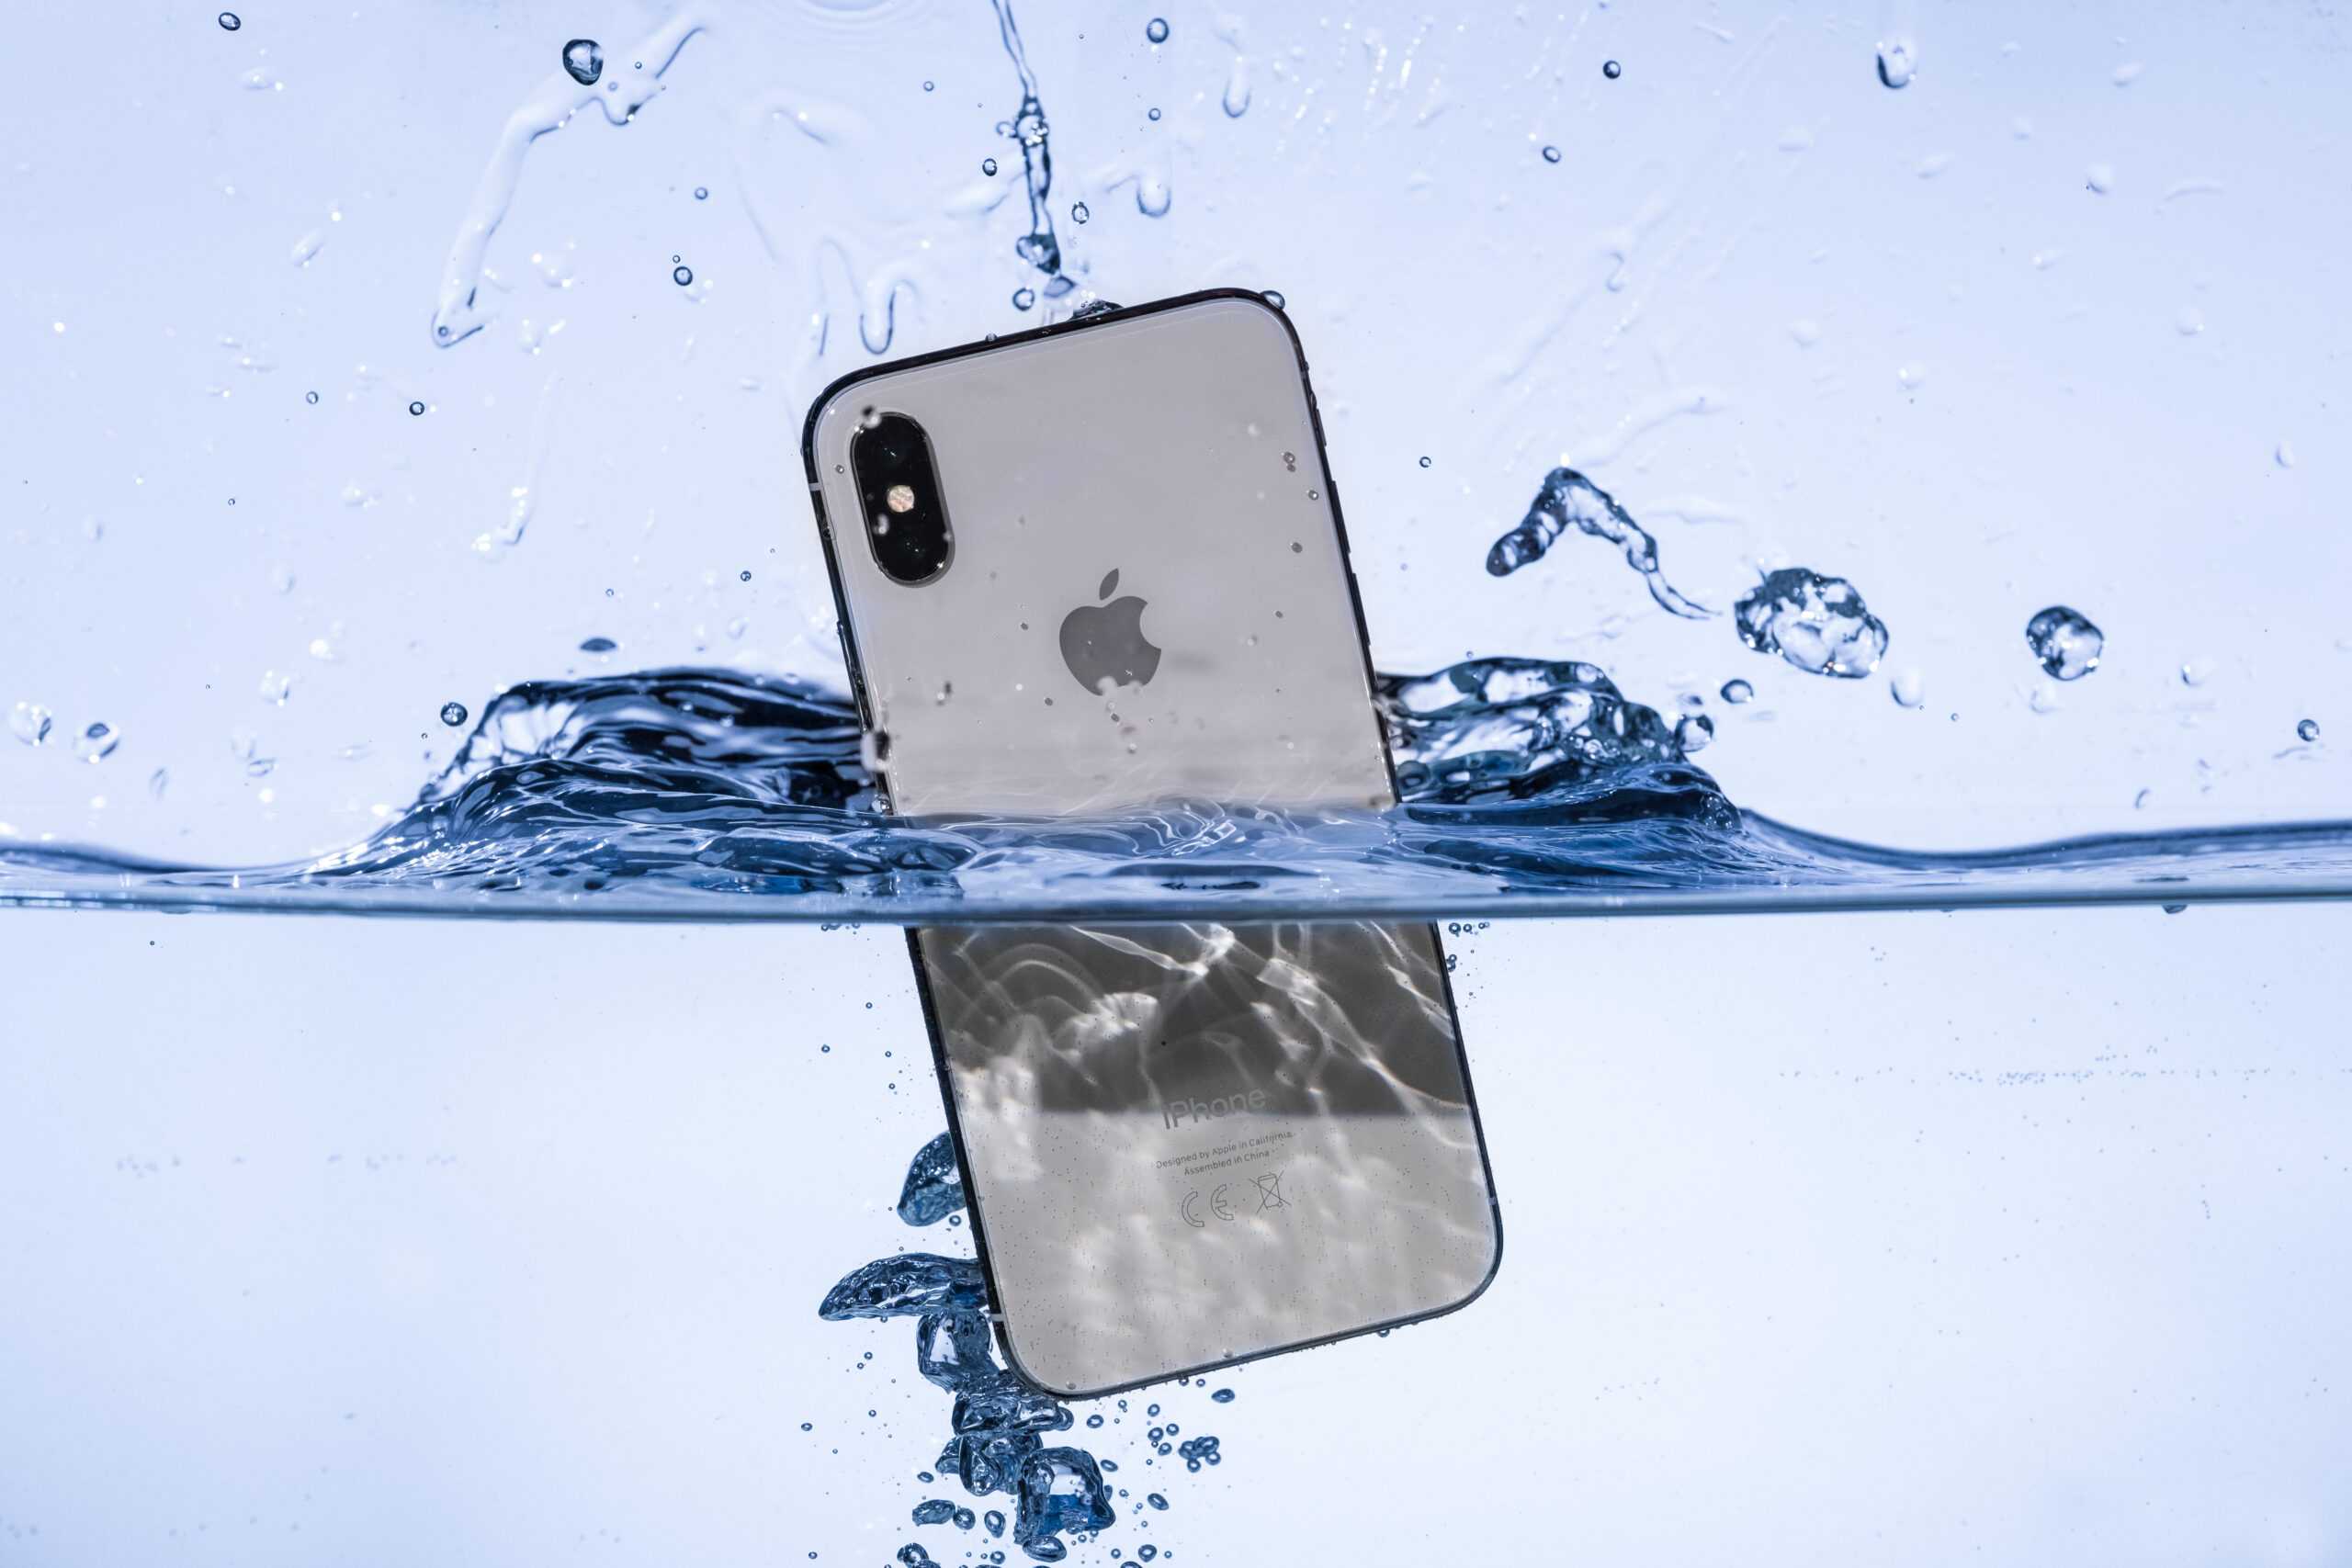 iPhone apple water